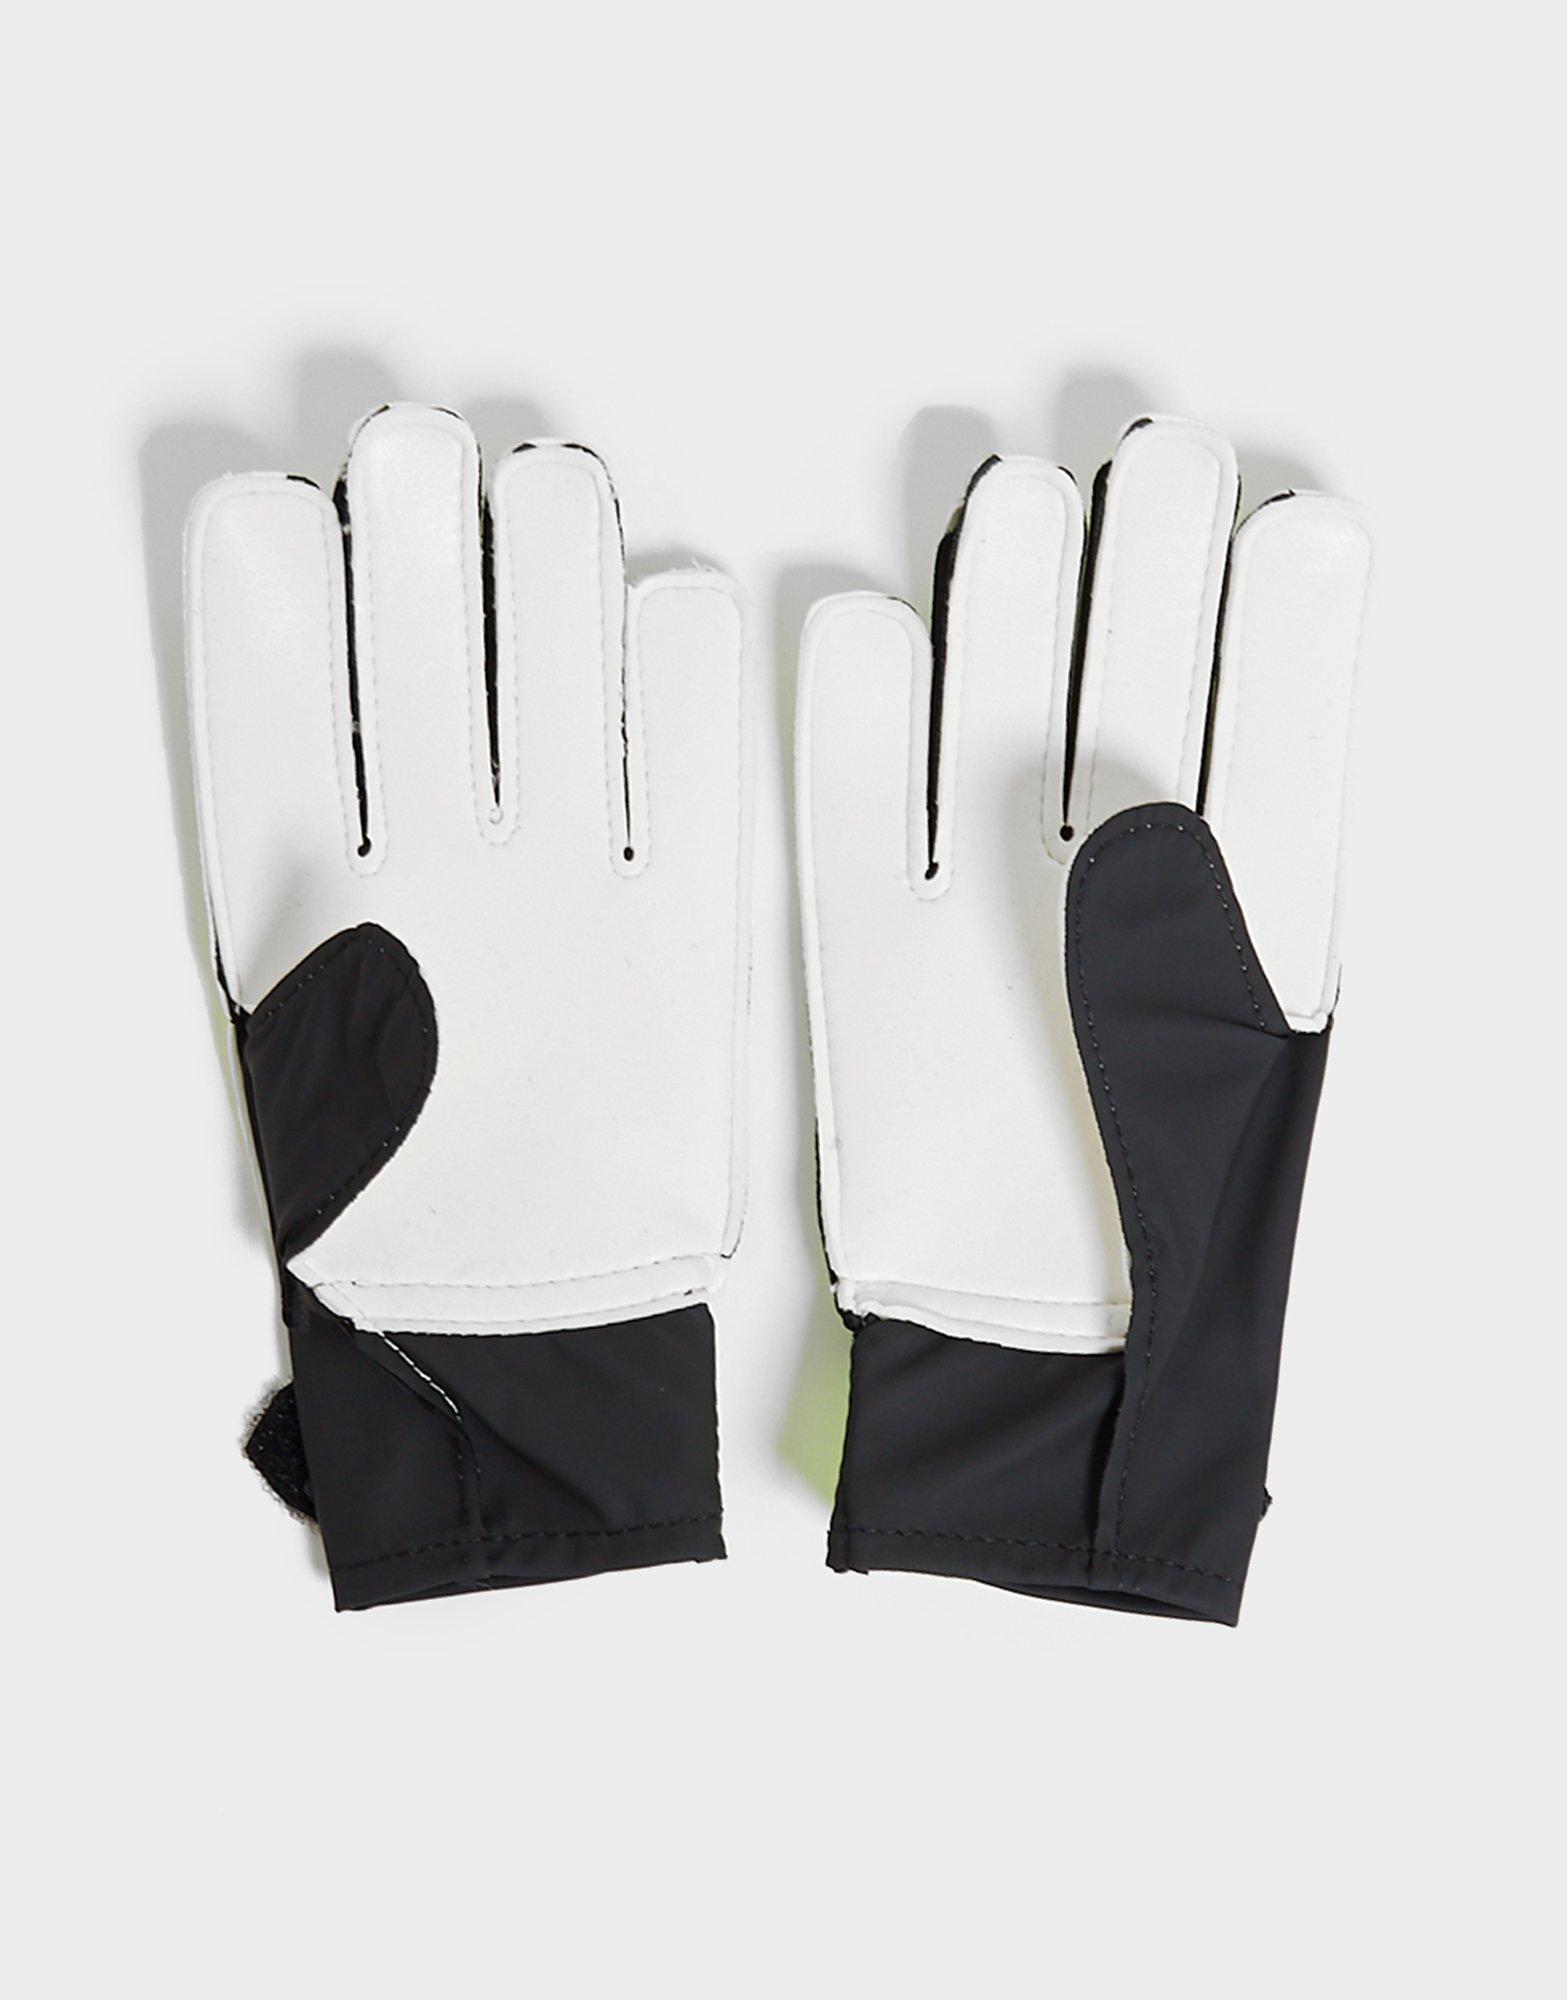 adidas training goalkeeper gloves